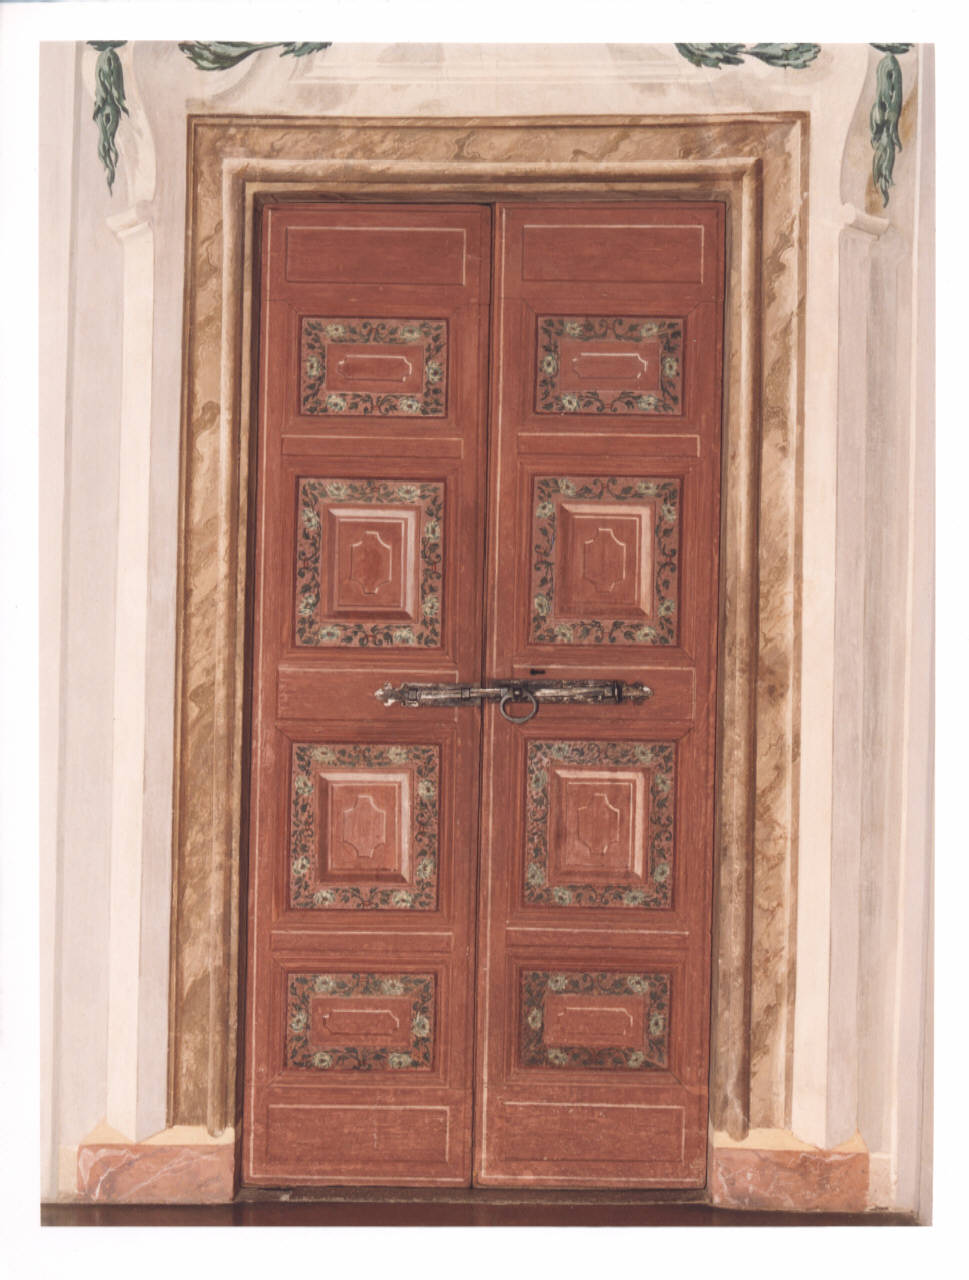 motivi decorativi floreali (porta dipinta) - manifattura lombarda (prima metà sec. XVIII)